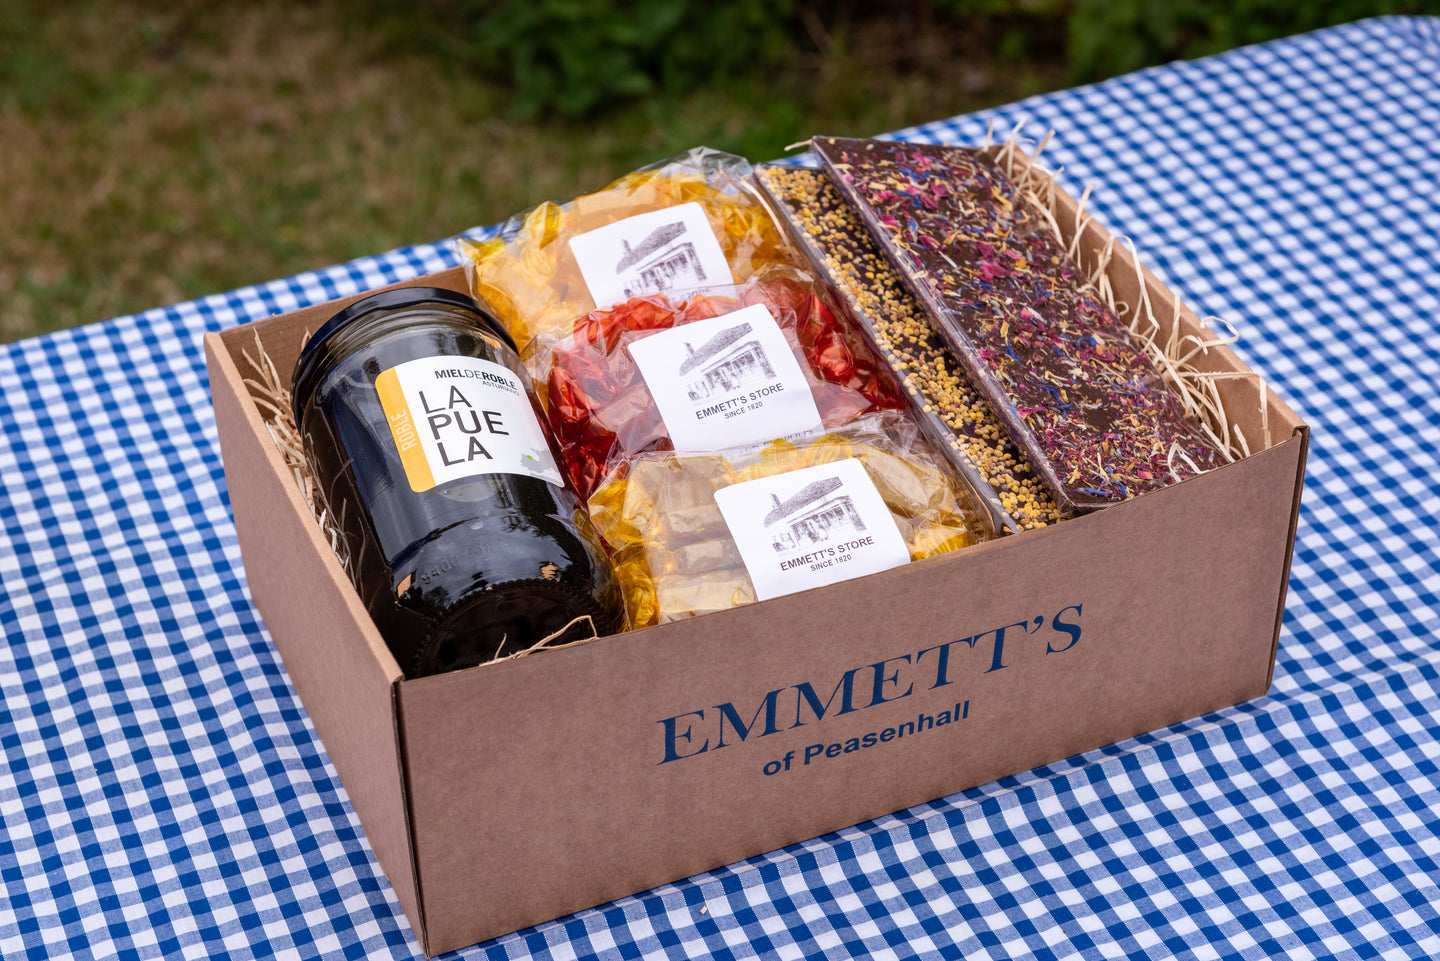 Emmett's Bee Box - Emmett's